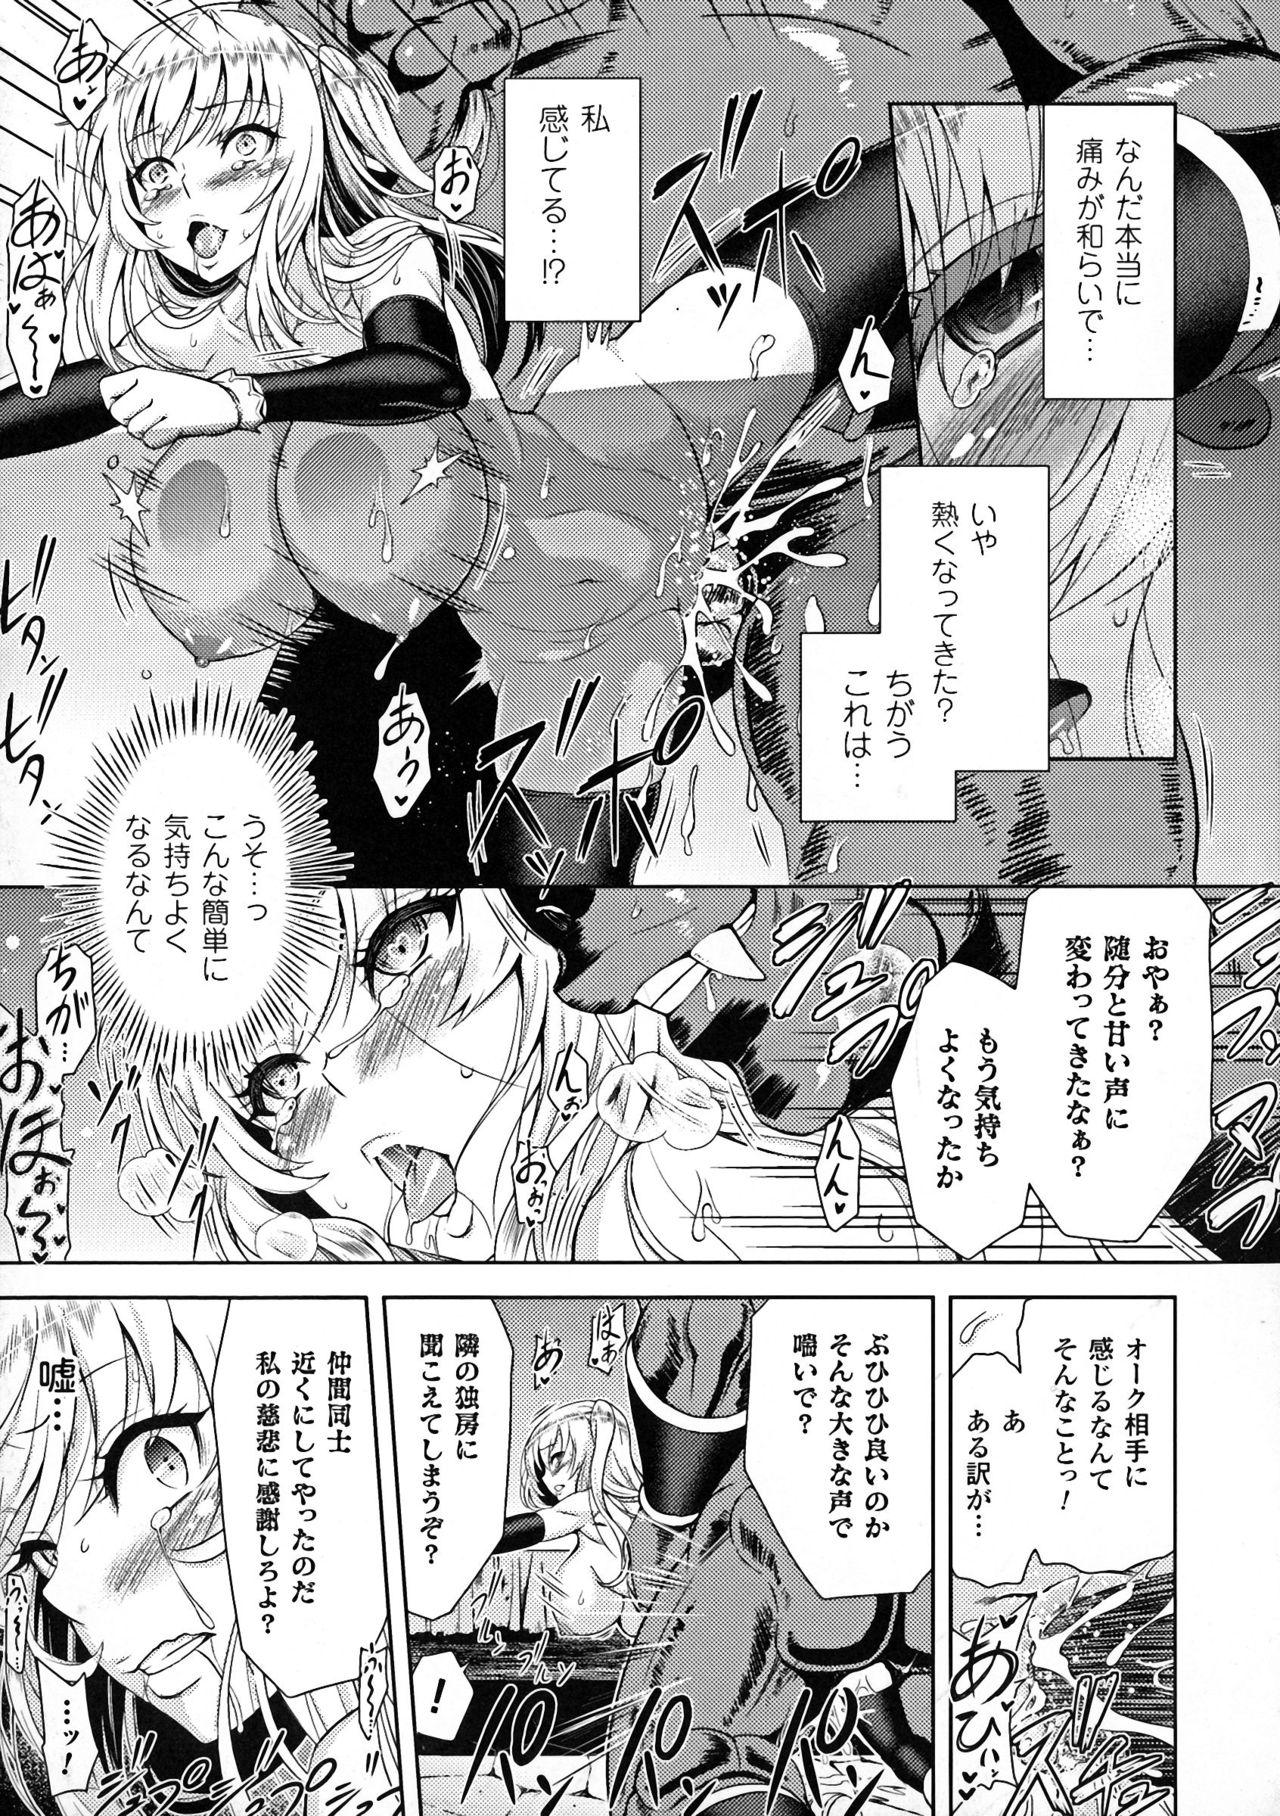 Seigi no Heroine Kangoku File DX Vol. 7 23